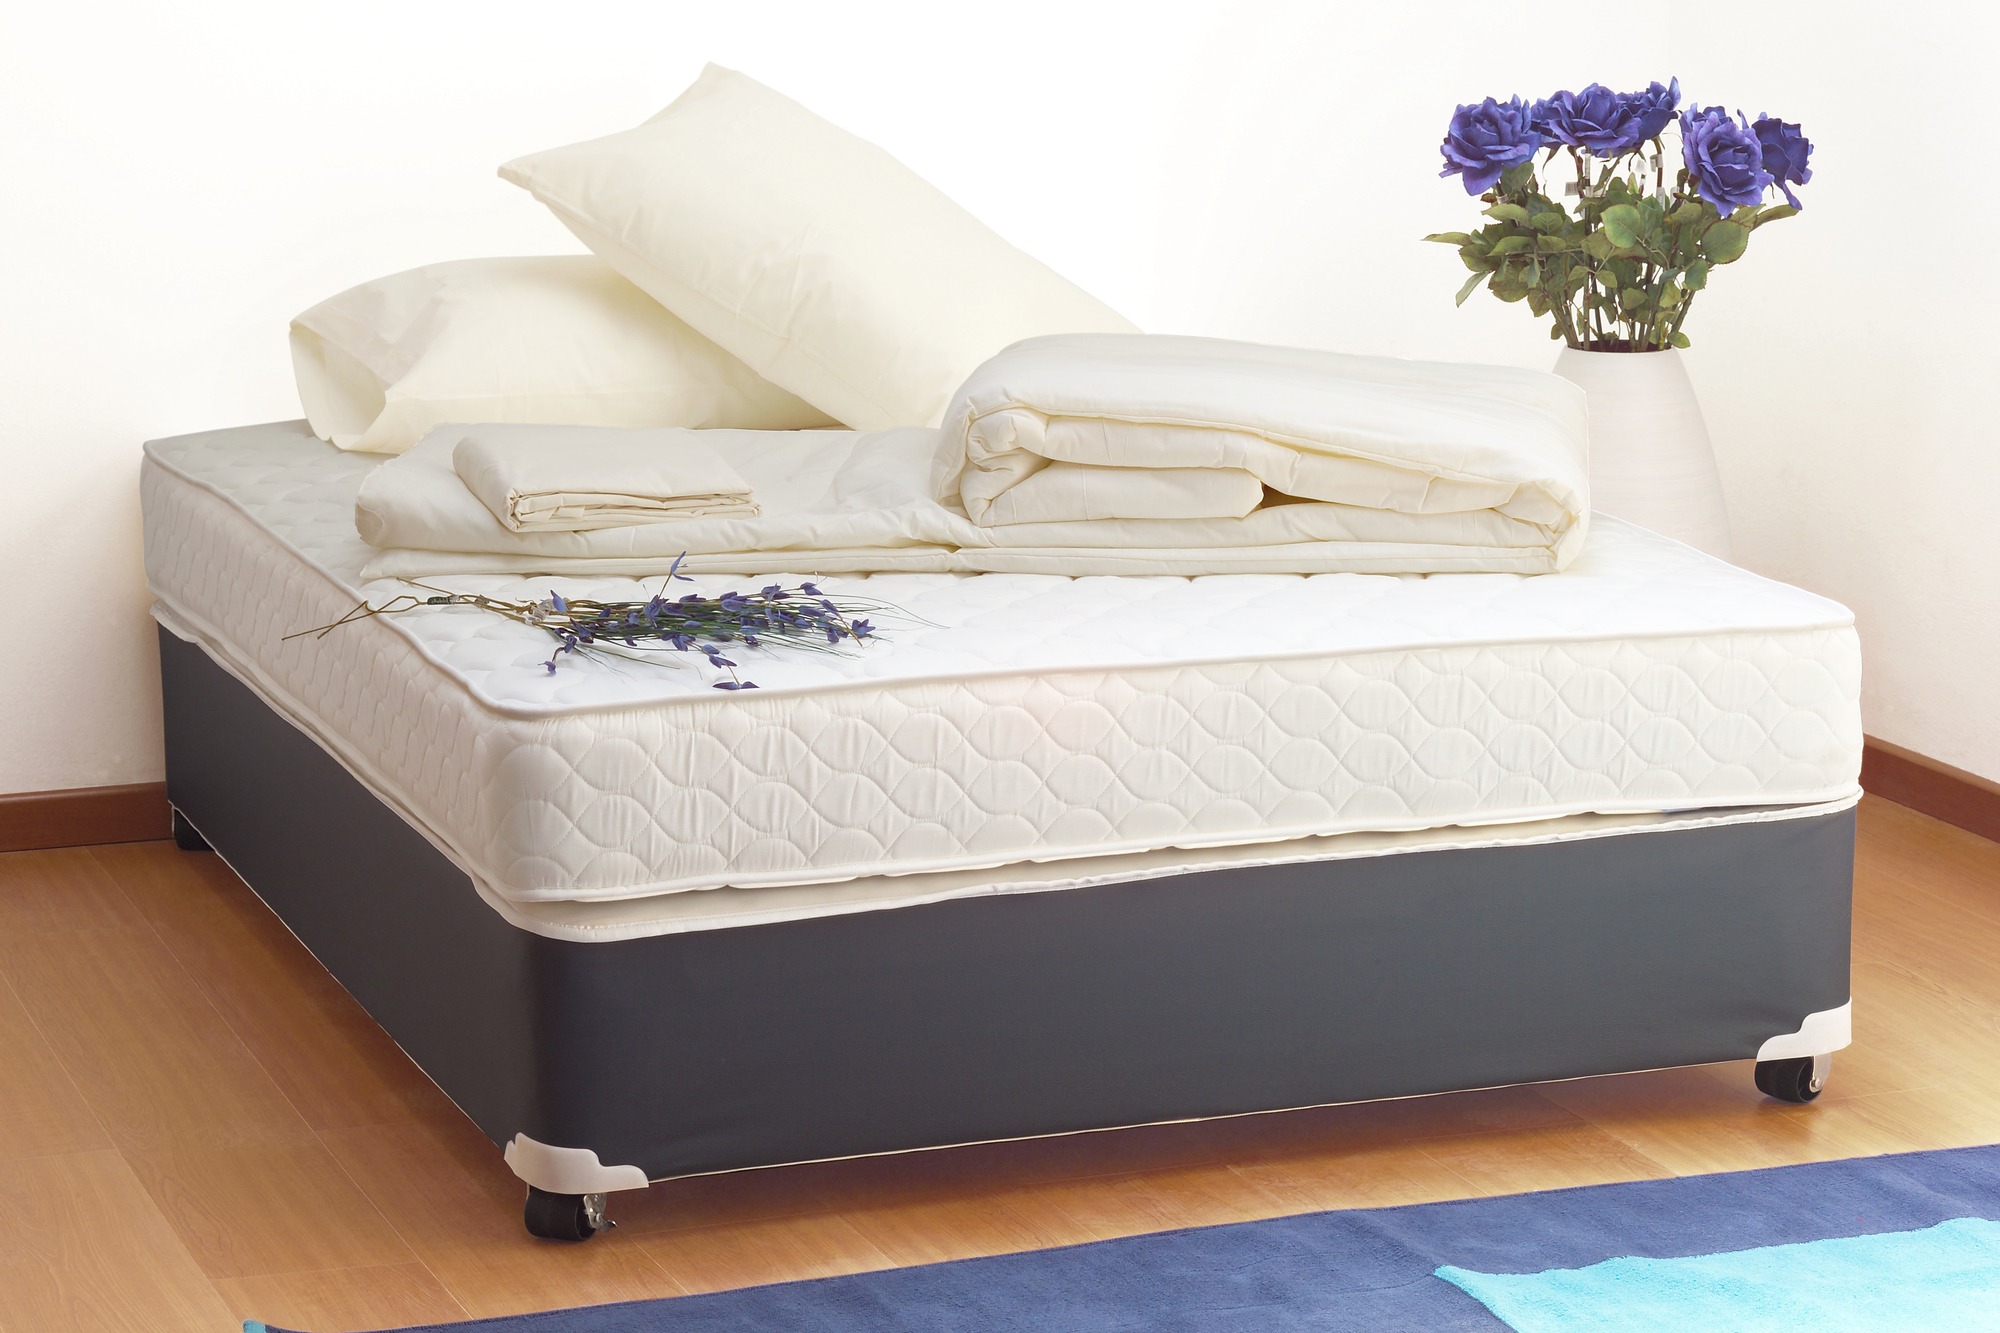 twin mattress for sale 50 in ogden utah